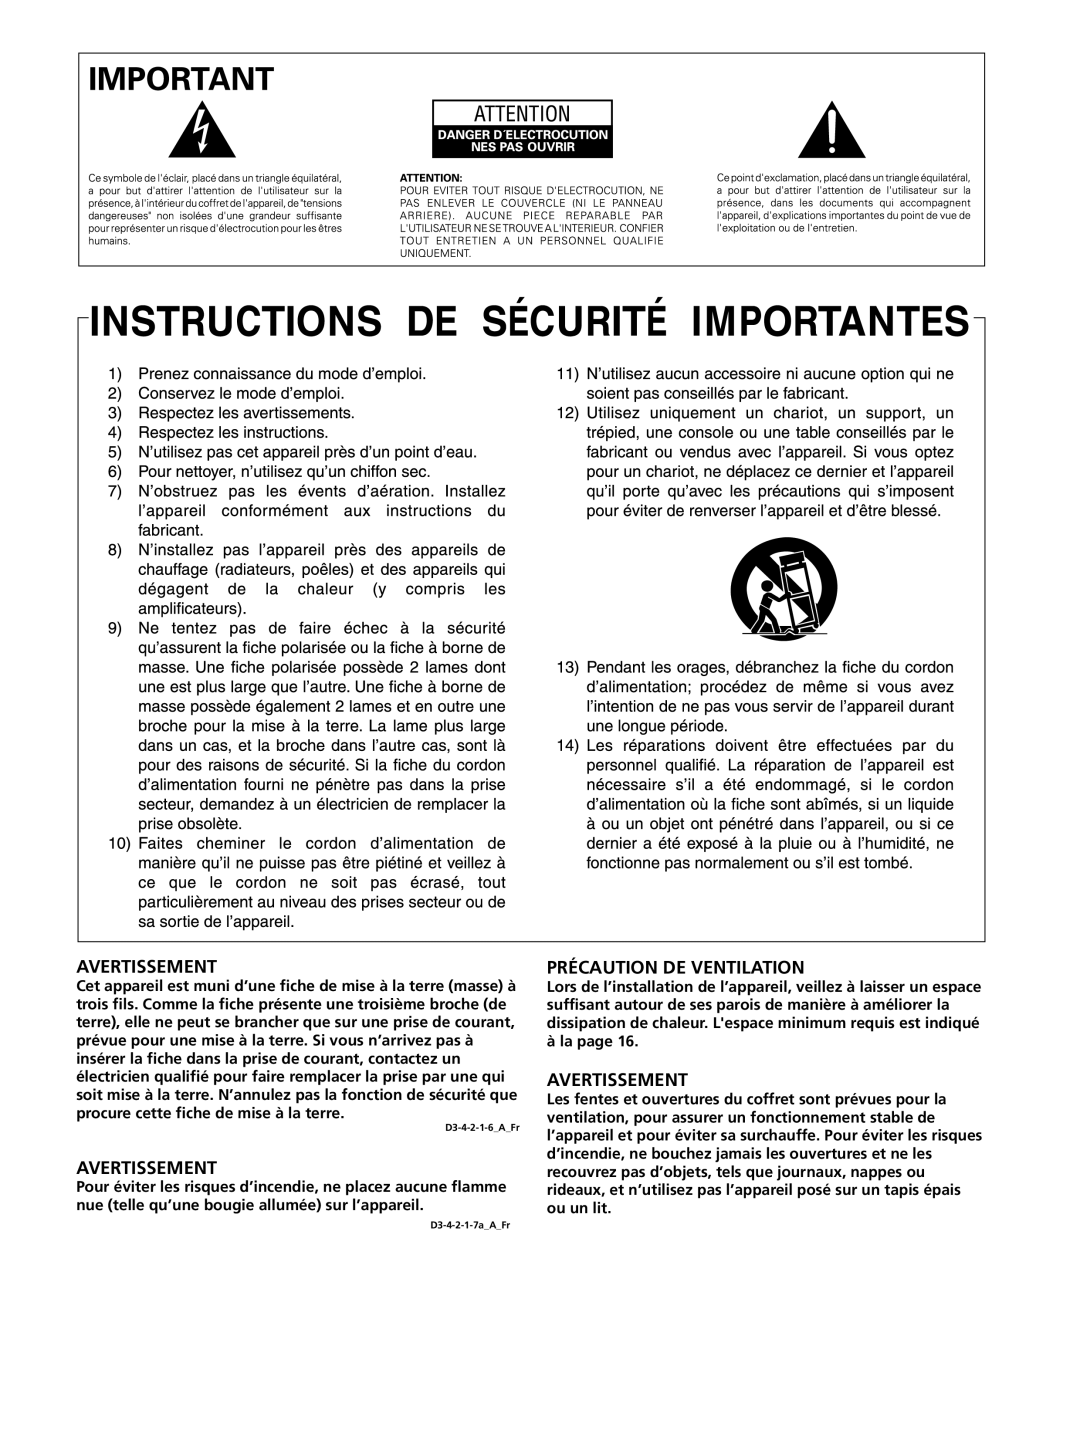 Pioneer PRO-FHD1 operating instructions Avertissement, Précaution De Ventilation, D3-4-2-1-6AFr, D3-4-2-1-7aAFr 